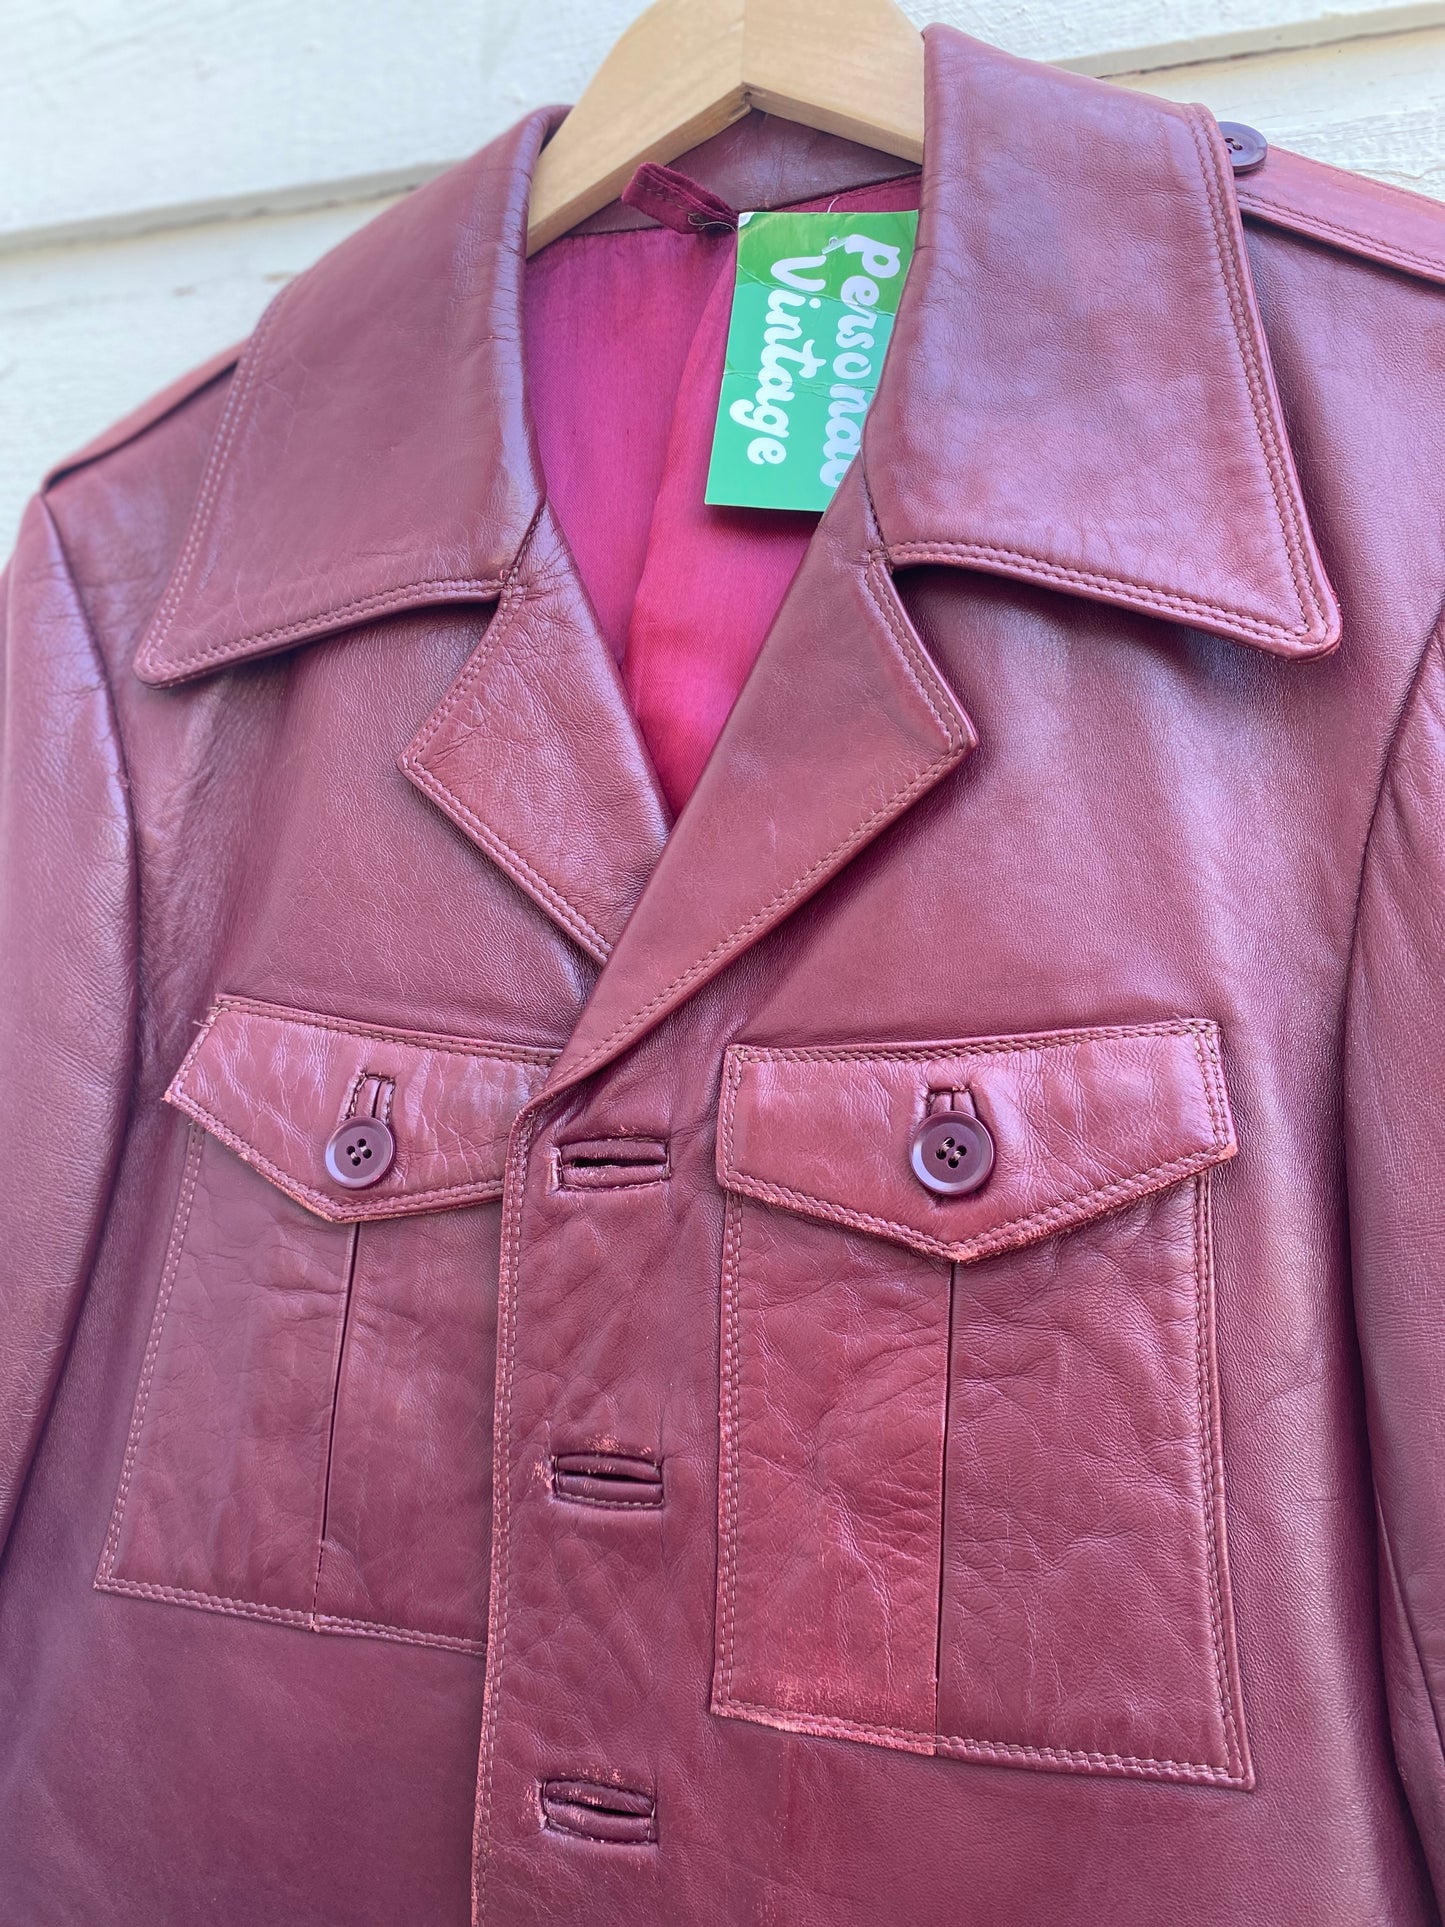 Vintage 1970s Burgundy Red Leather Jacket  medium